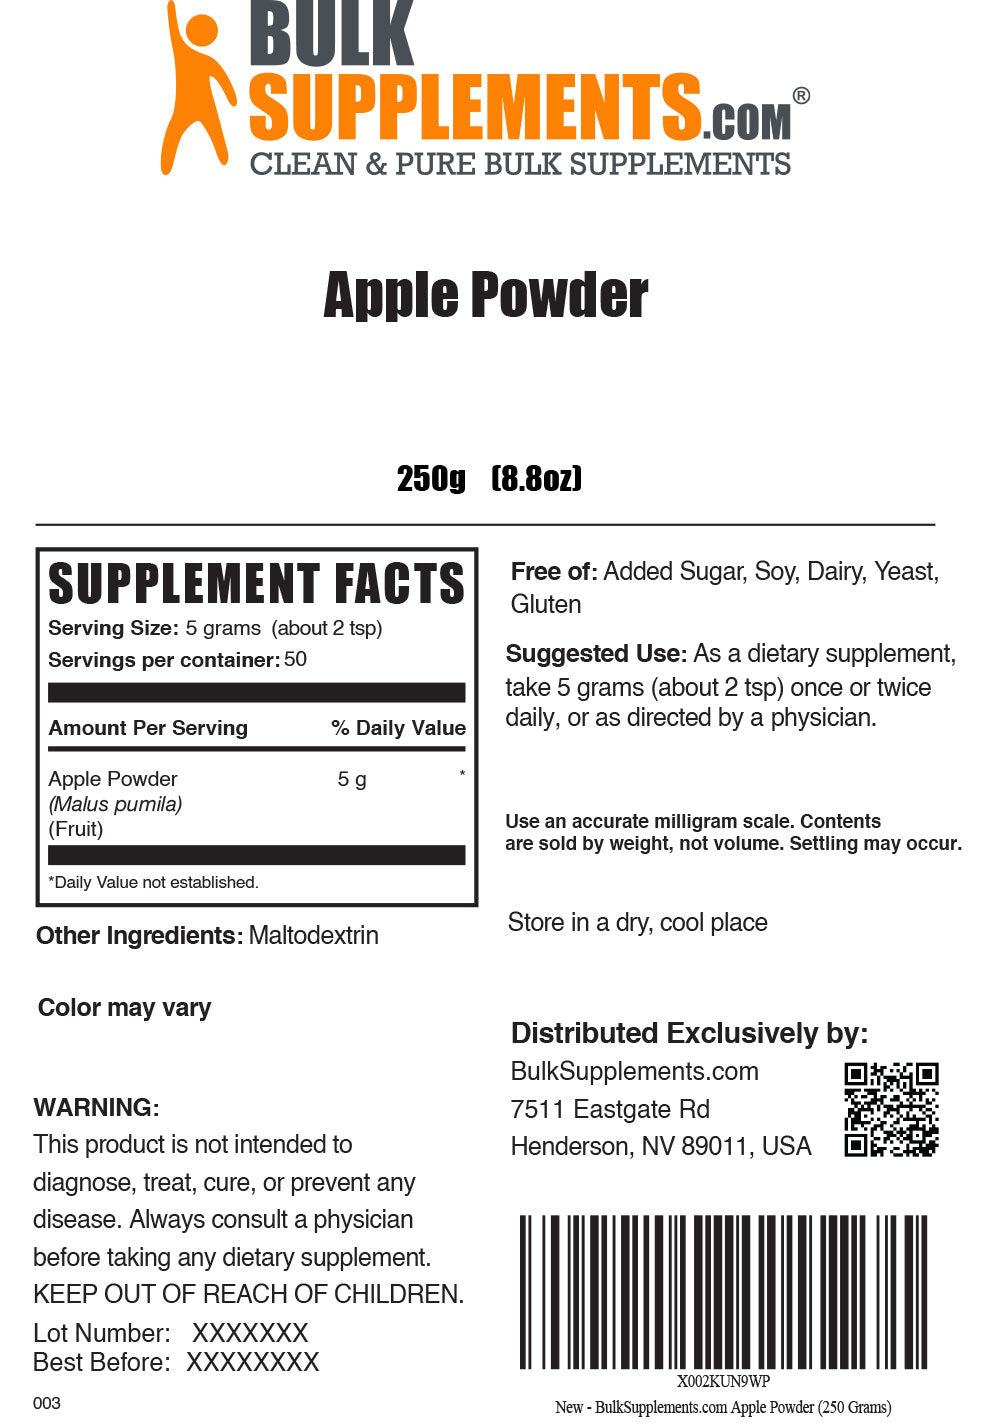 Apple Powder label 250g